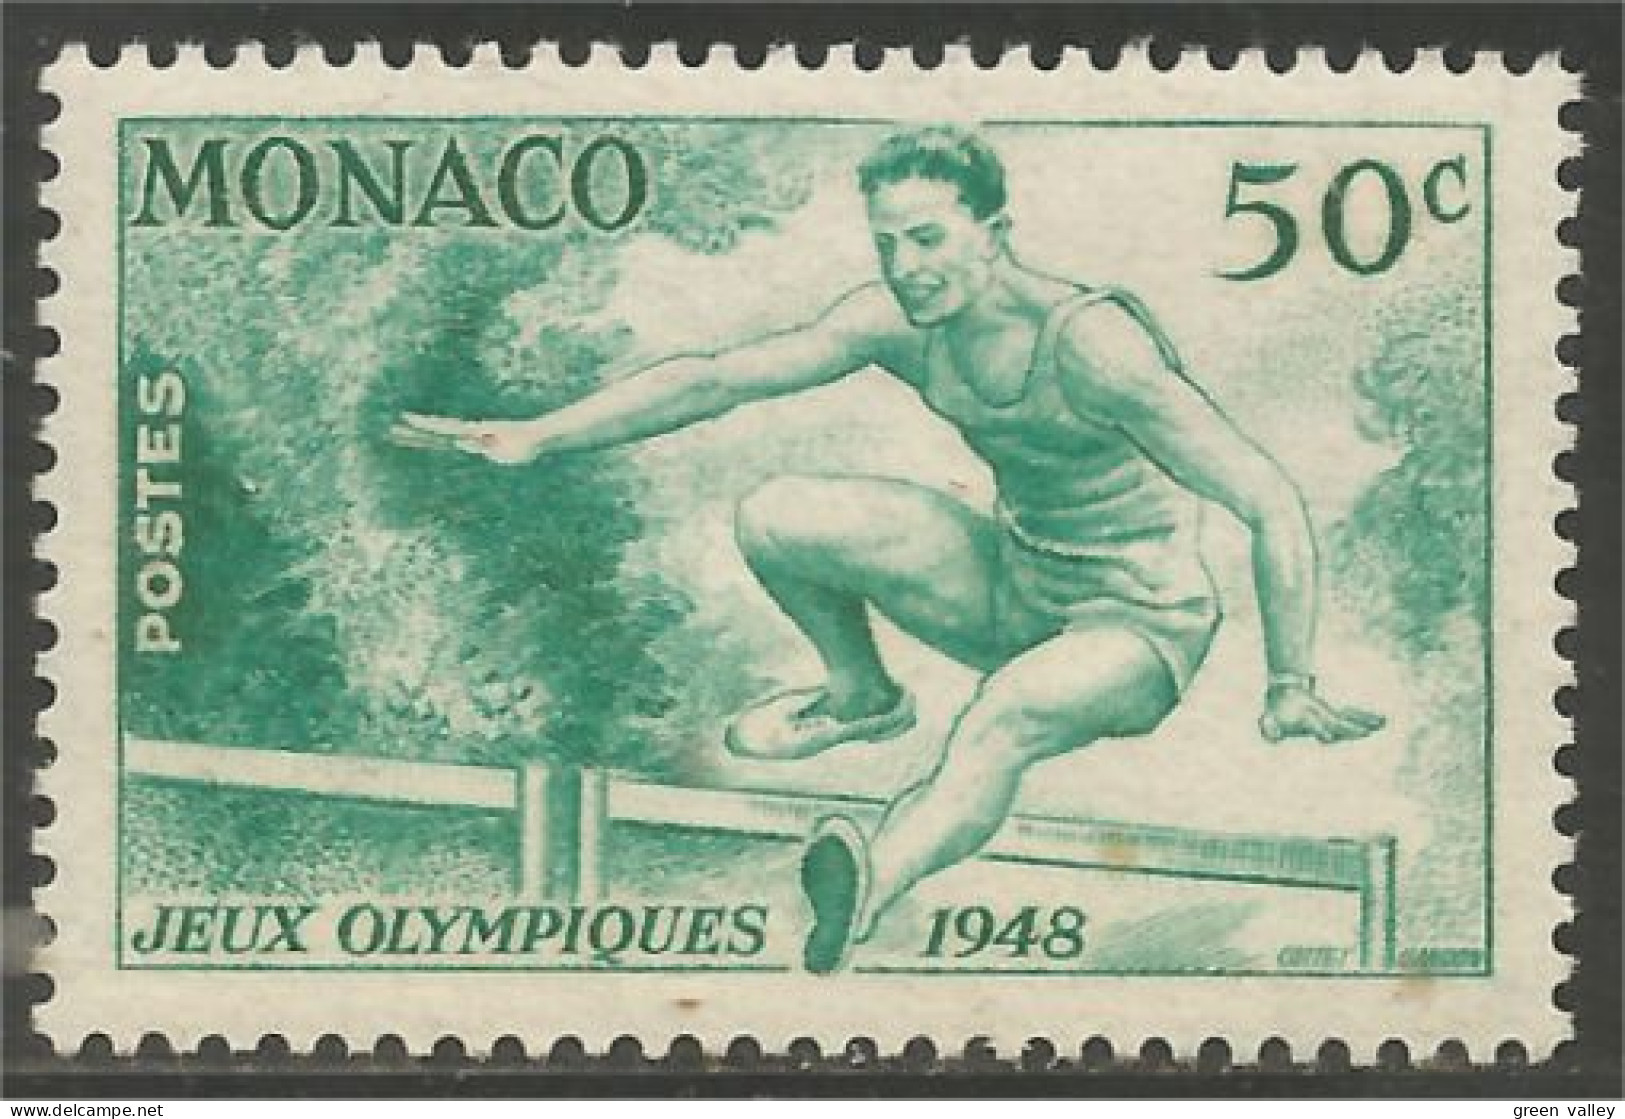 630 Monaco 1948 Yv 319 Athlétisme Course Haies Hurdles Running MH * Neuf (MON-240b) - Verano 1948: Londres